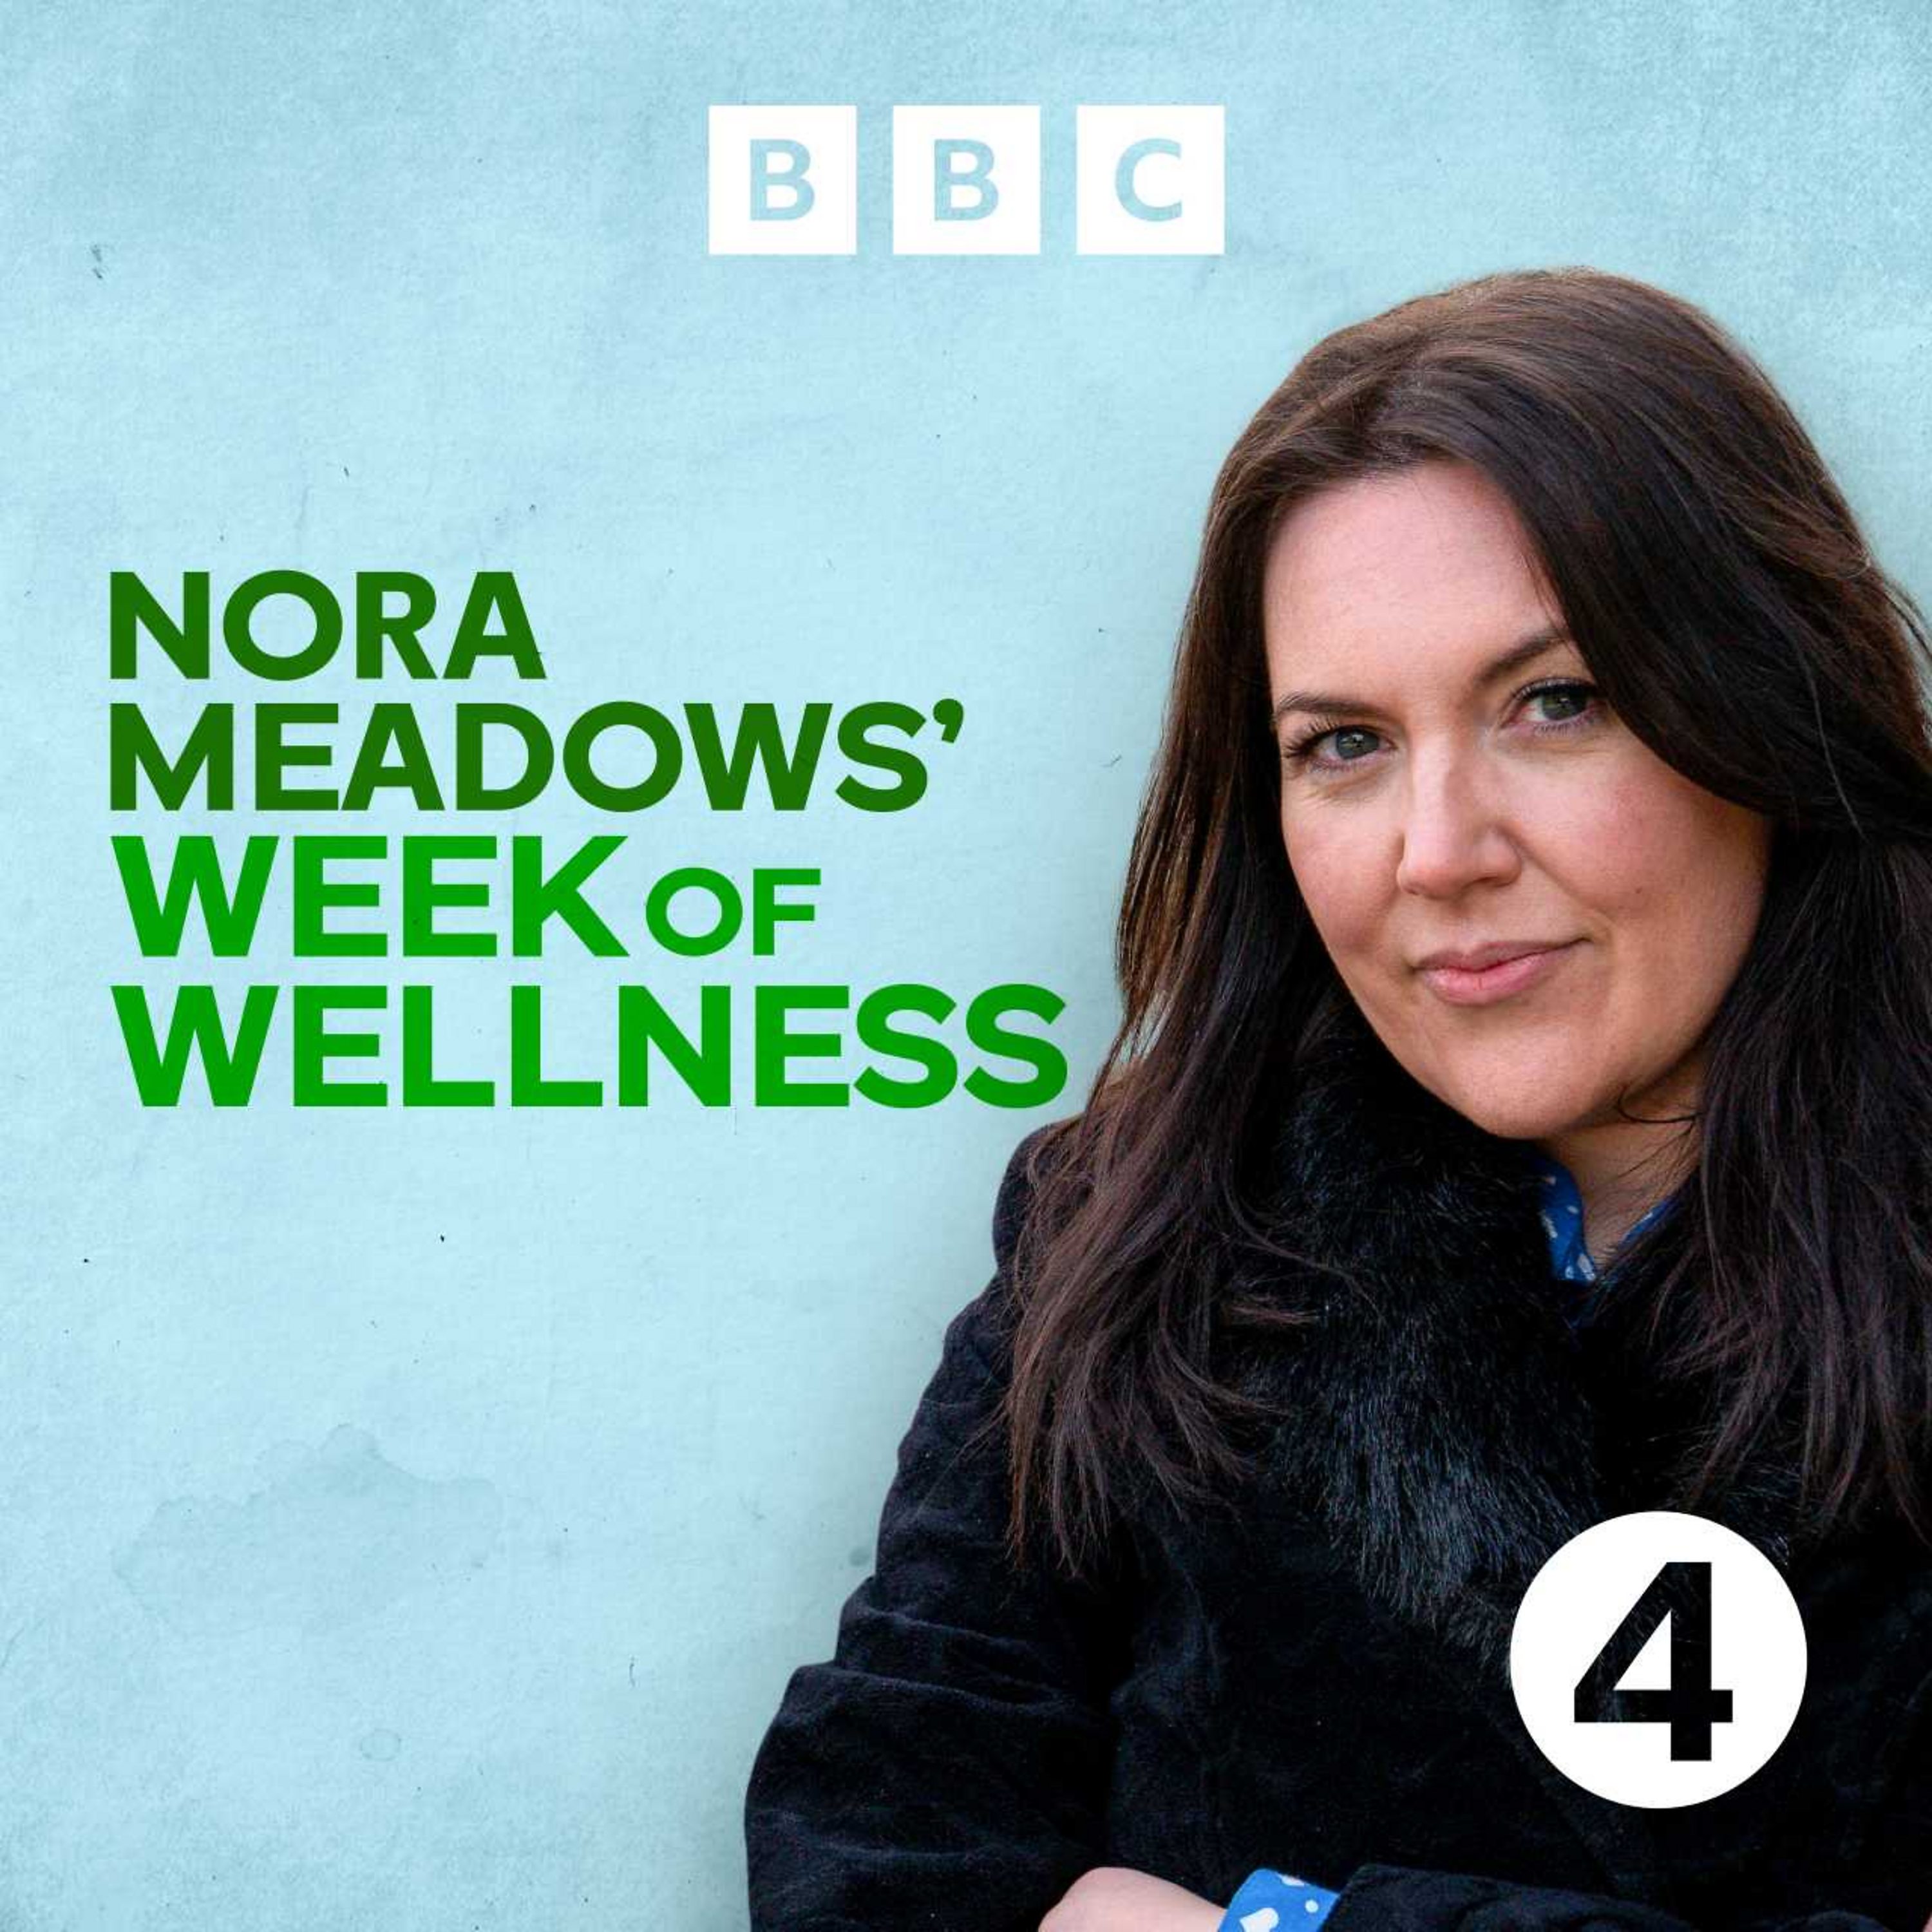 Nora Meadows' Week of Wellness - 1. Deep Inside Brian